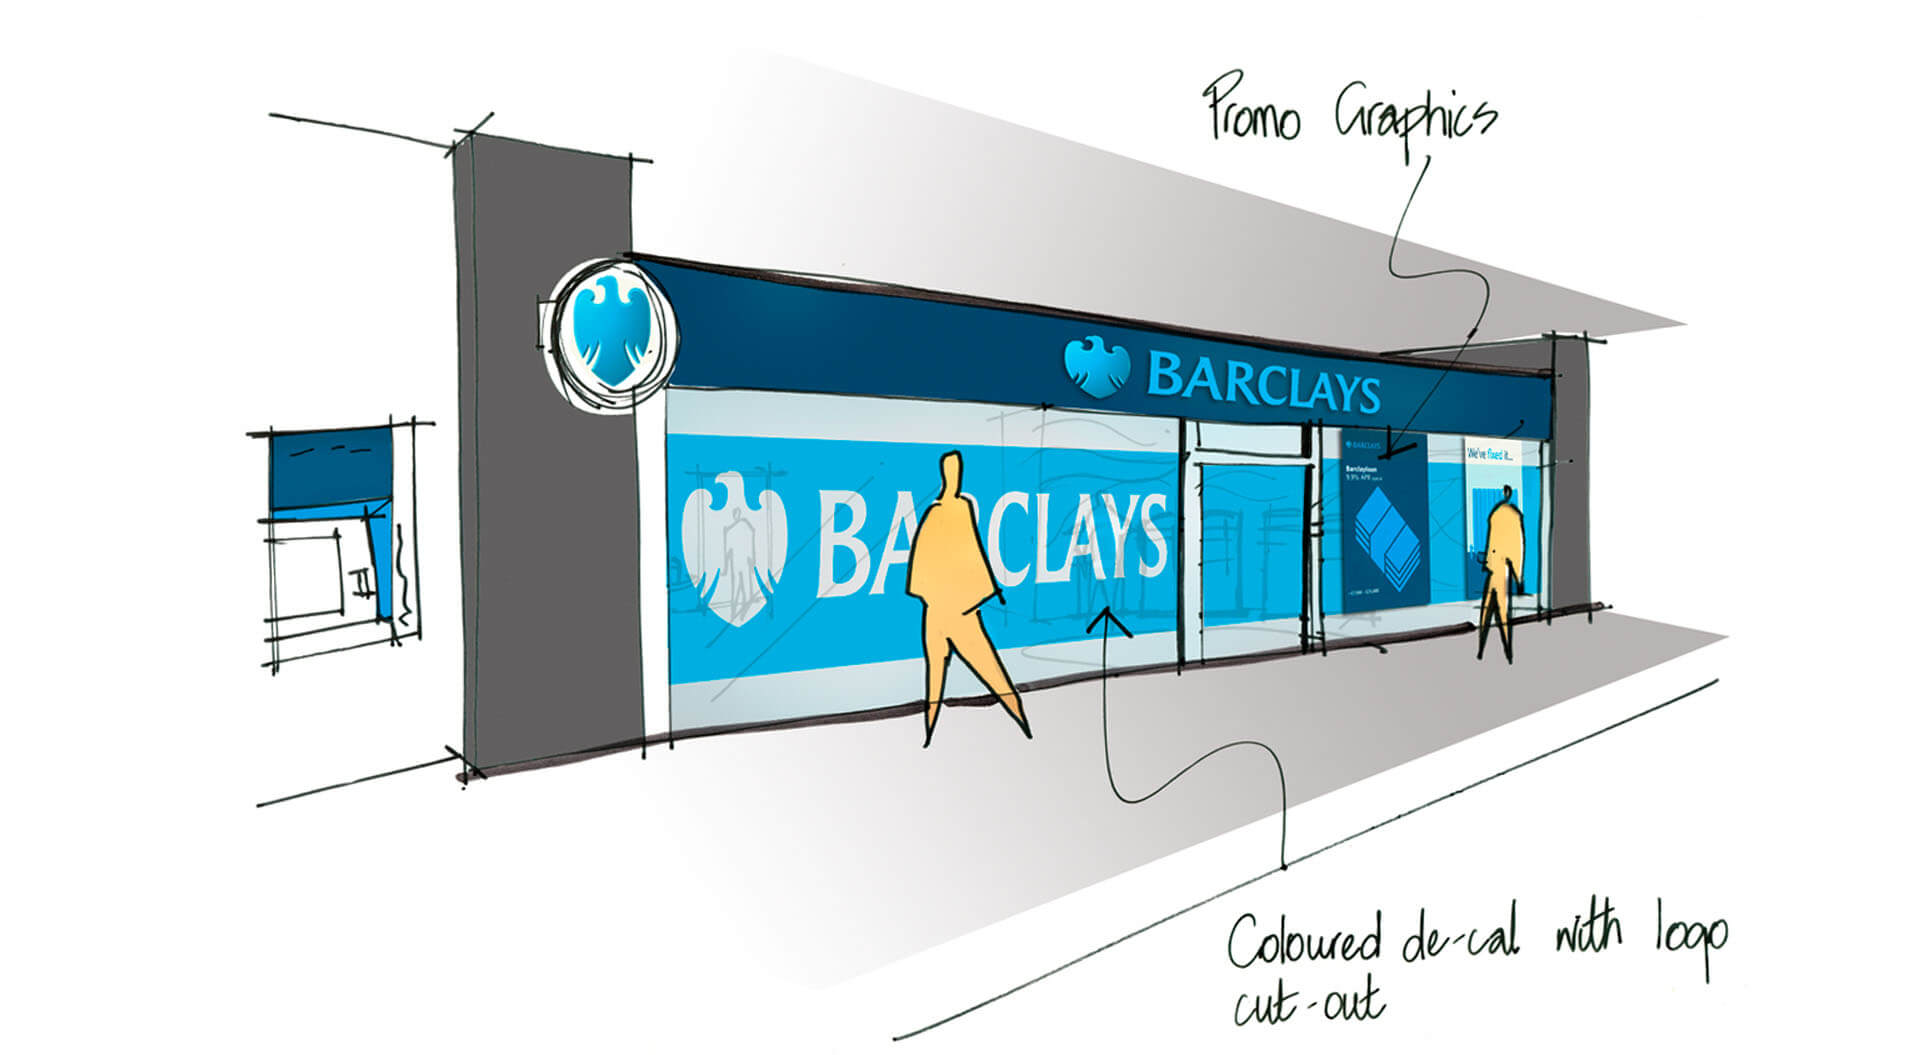 Concept sketch ideas for Barclays Bank highstreet branch branding